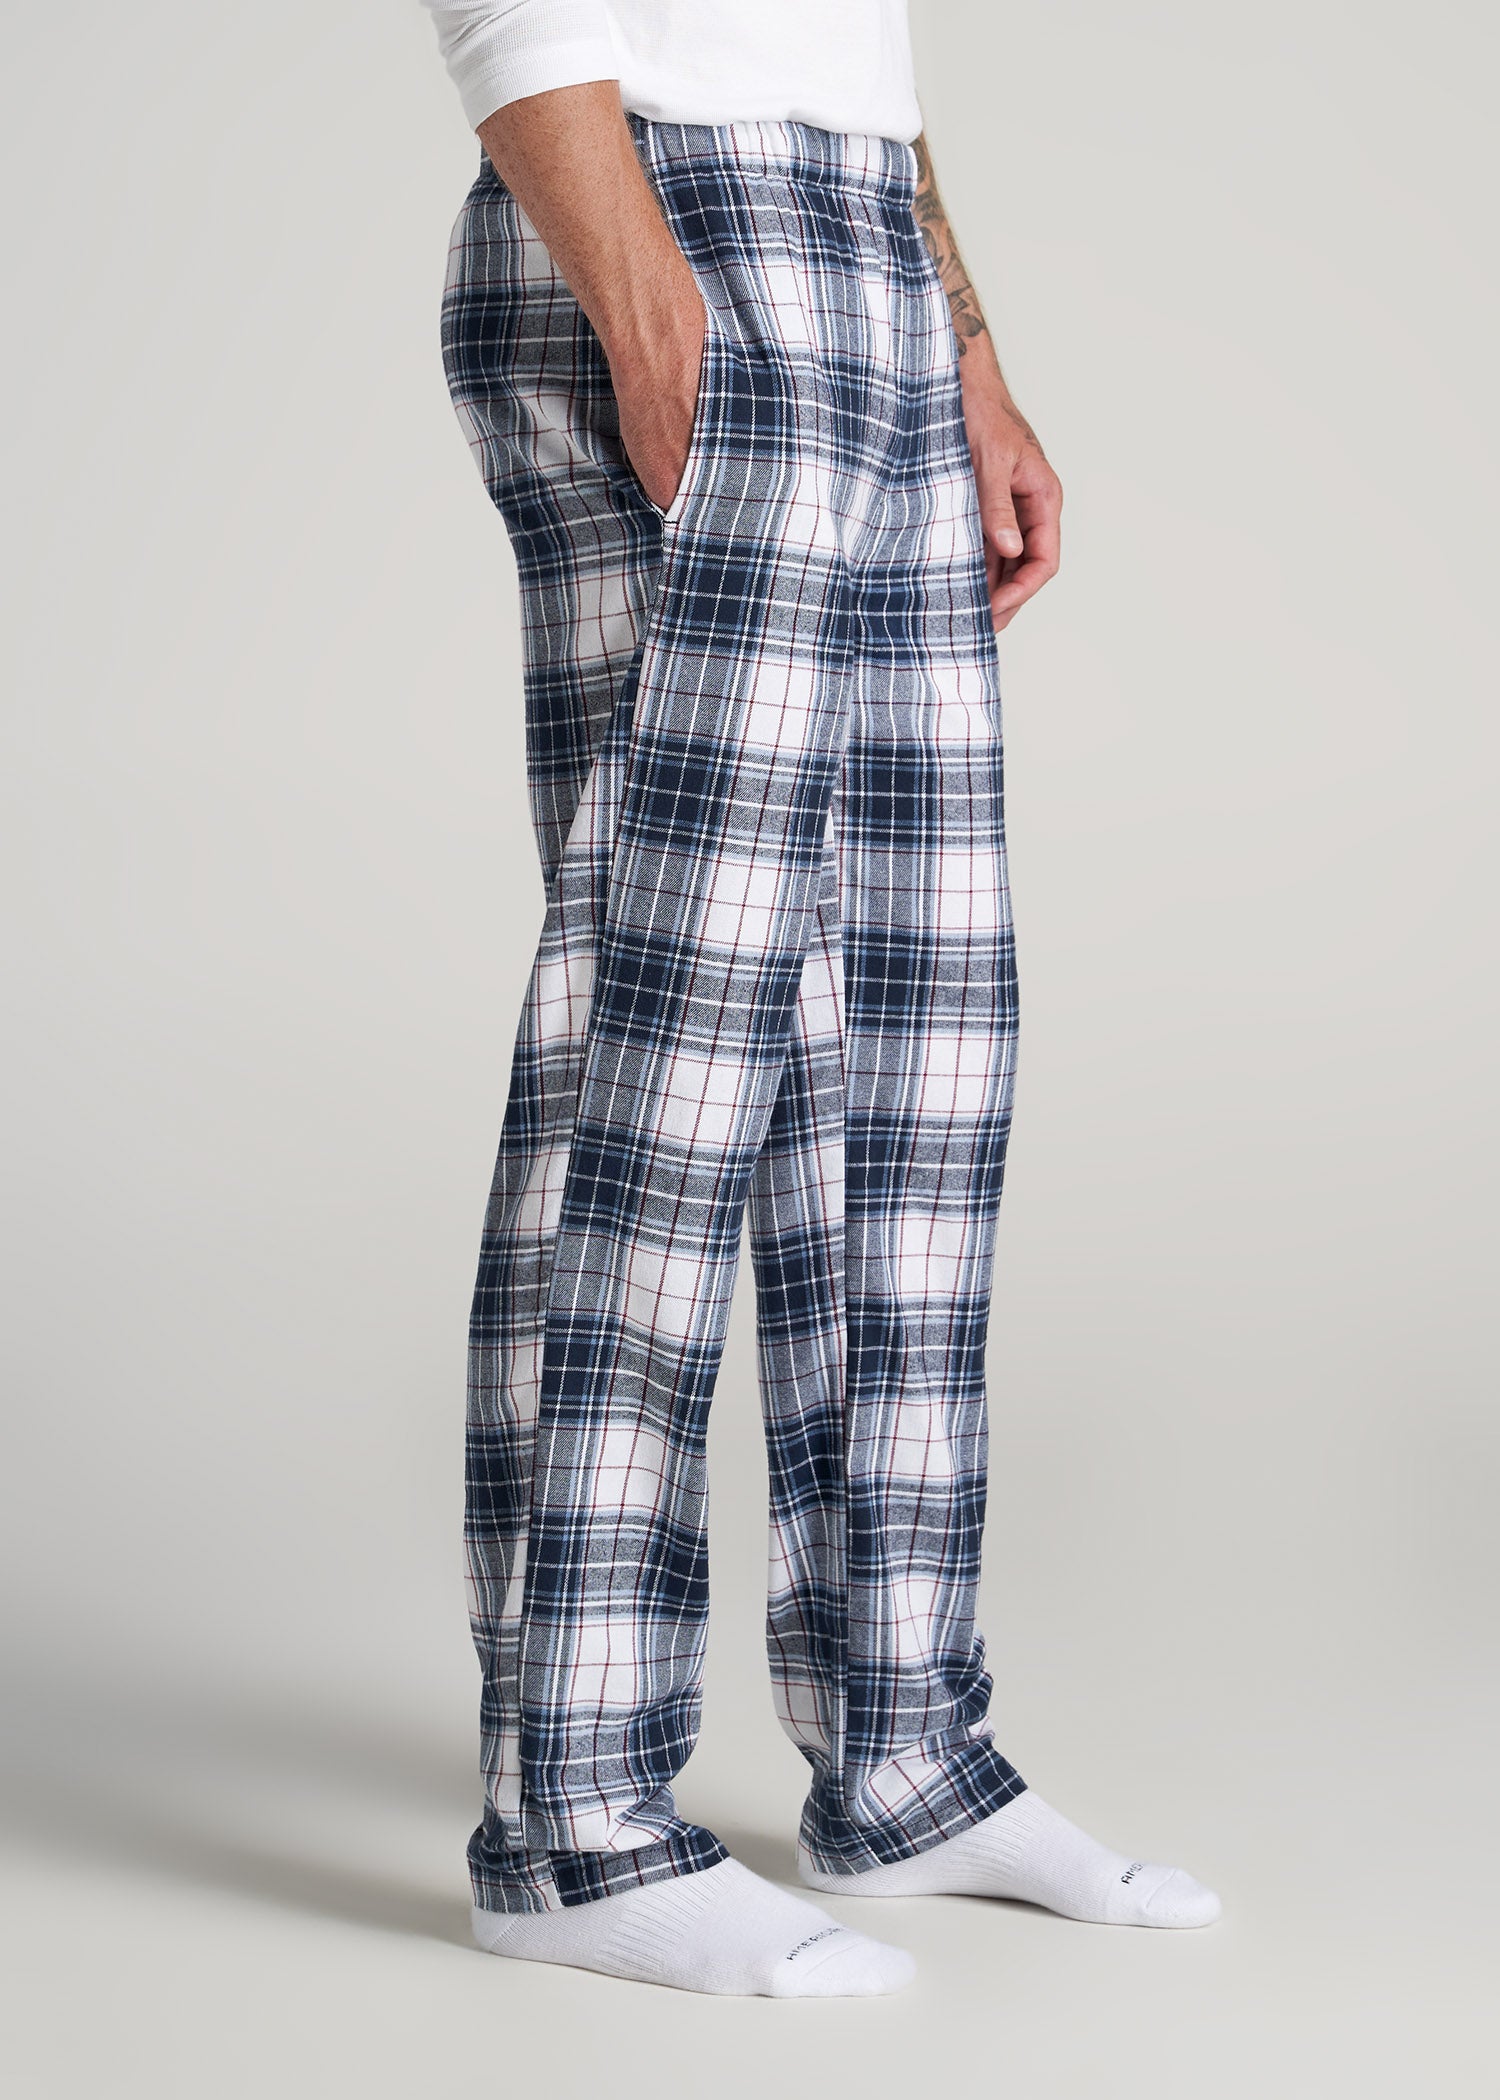 Boys pajama pants + FREE SHIPPING | Zappos.com